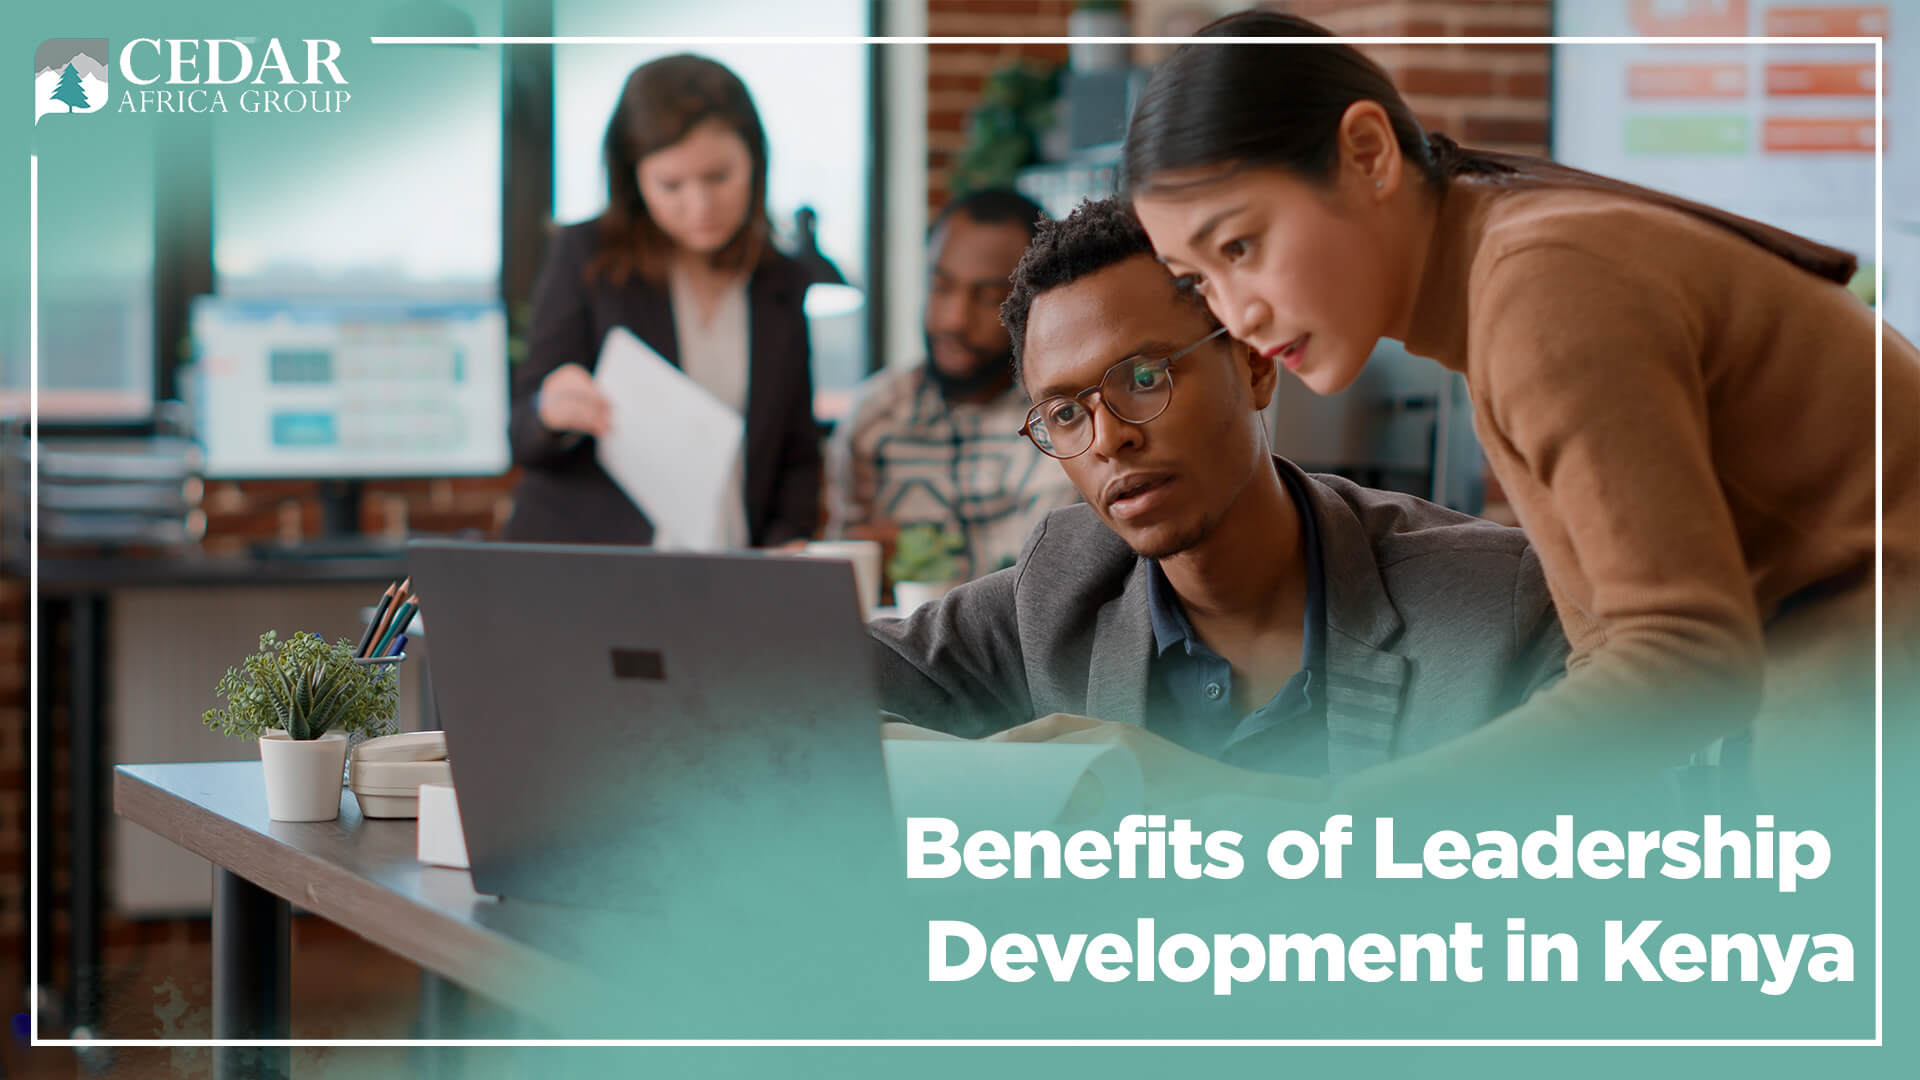 Benefits of leadership development in Kenya